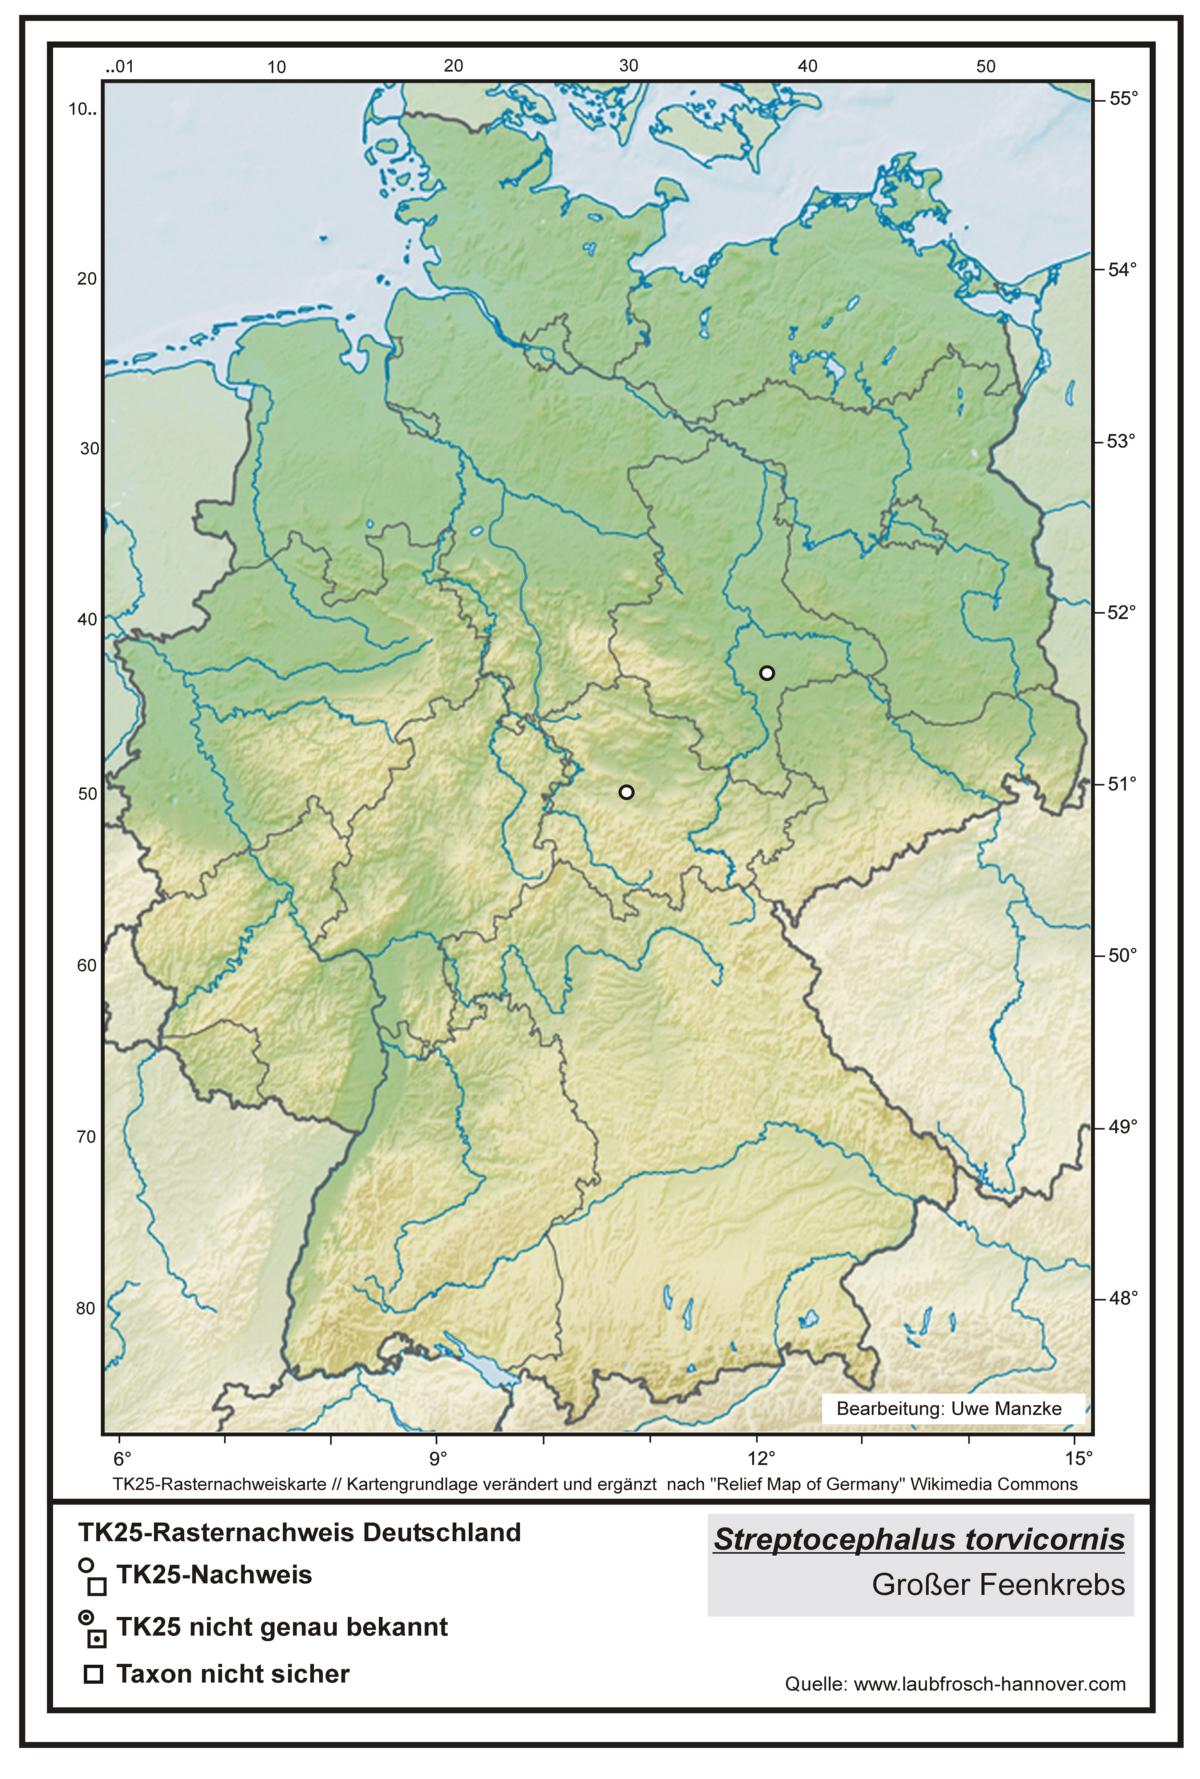 Streptocephalus torvicornis  TK25-Rasternachweiskarte Deutschland, Bearbeitung Uwe Manzke; Kartengrundlage: verändert n. Relief Map of Germany Wikimedia Commons https://commons.wikimedia.org/wiki/File:Relief_Map_of_Germany.svg